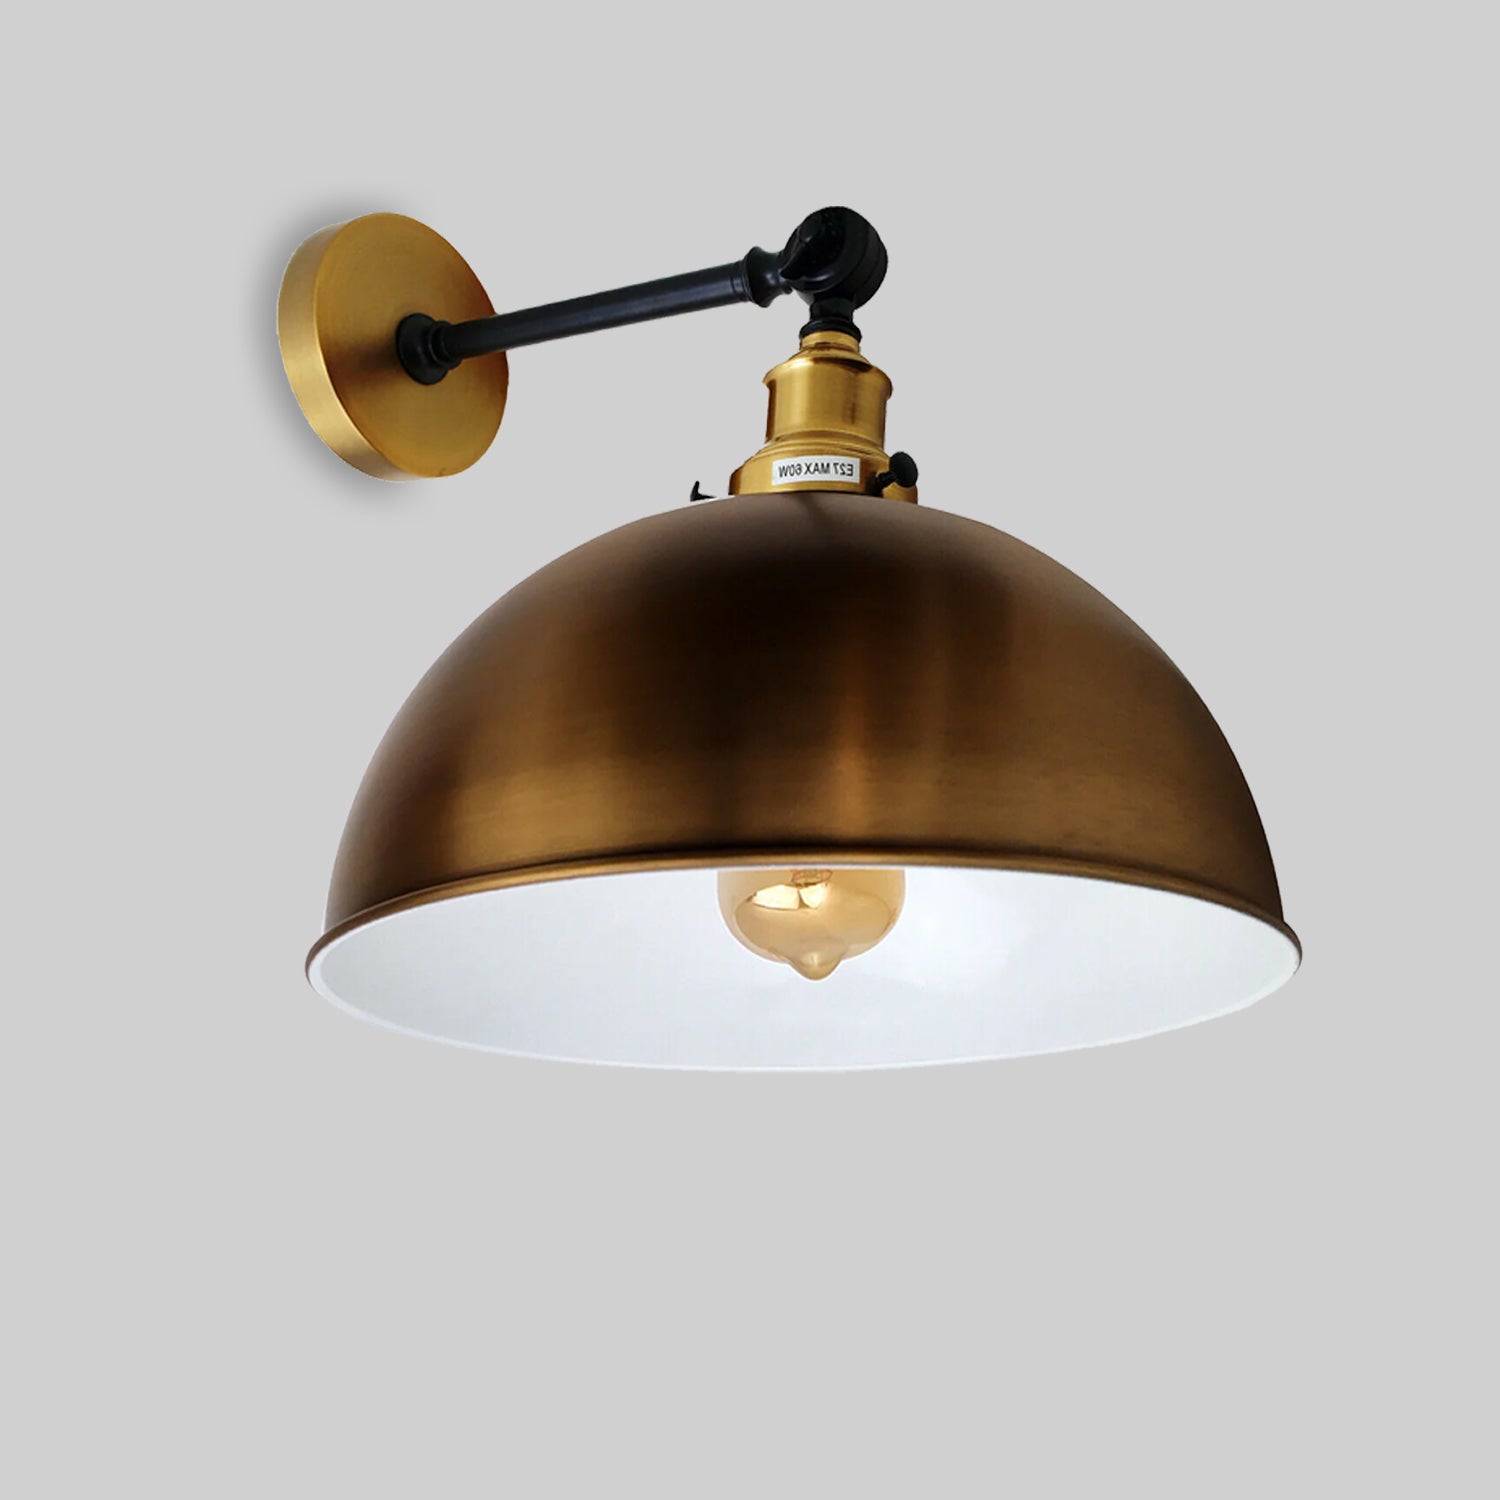 Vintage Style Adjustable Copper Color Wall Lights Sconce Lamp Fitting Kit~2473